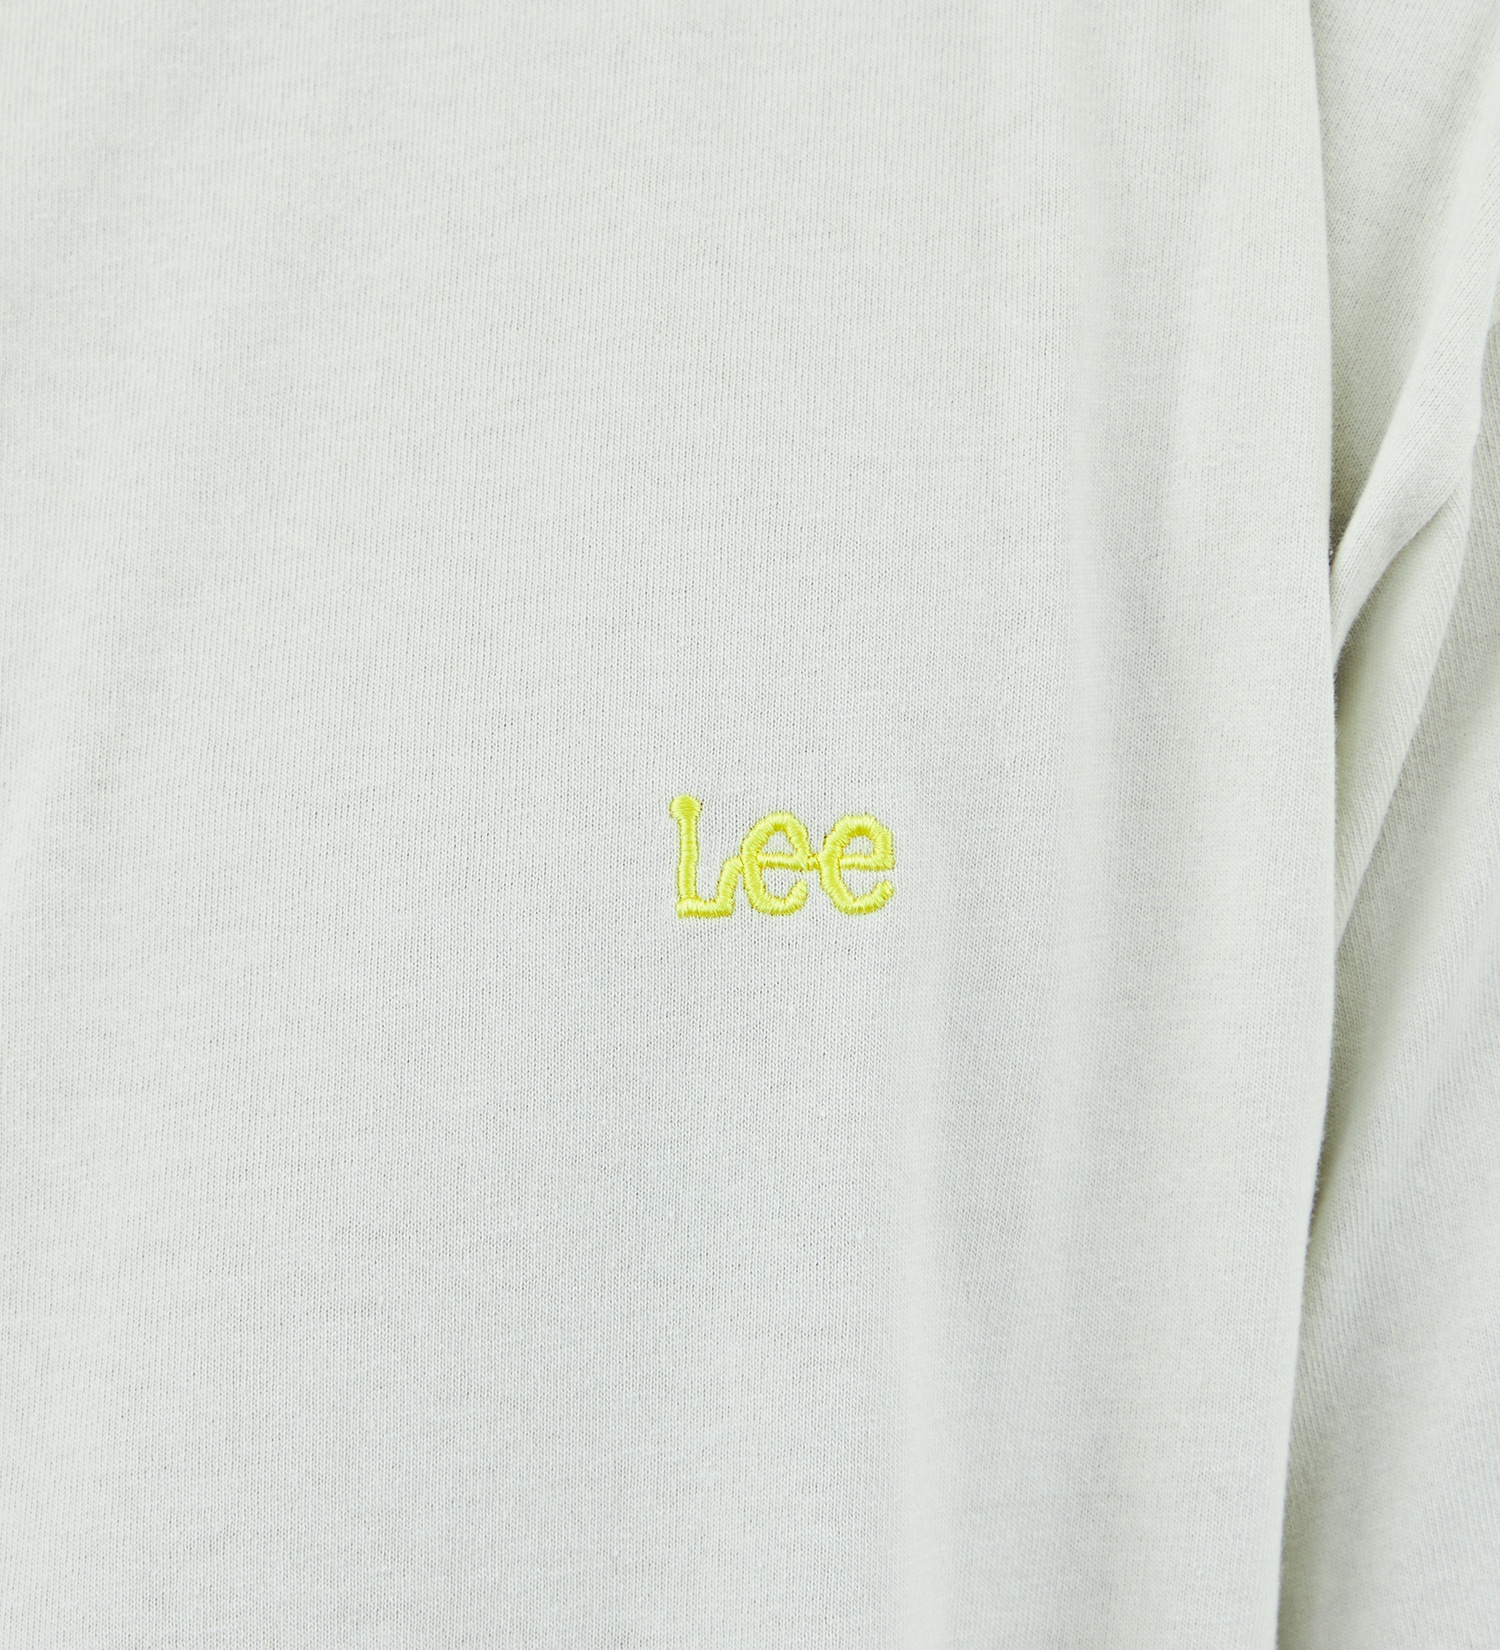 Lee(リー)の【SUMMER SALE】LeeネオンカラーロゴバックプリントTシャツ|トップス/Tシャツ/カットソー/メンズ|グレー